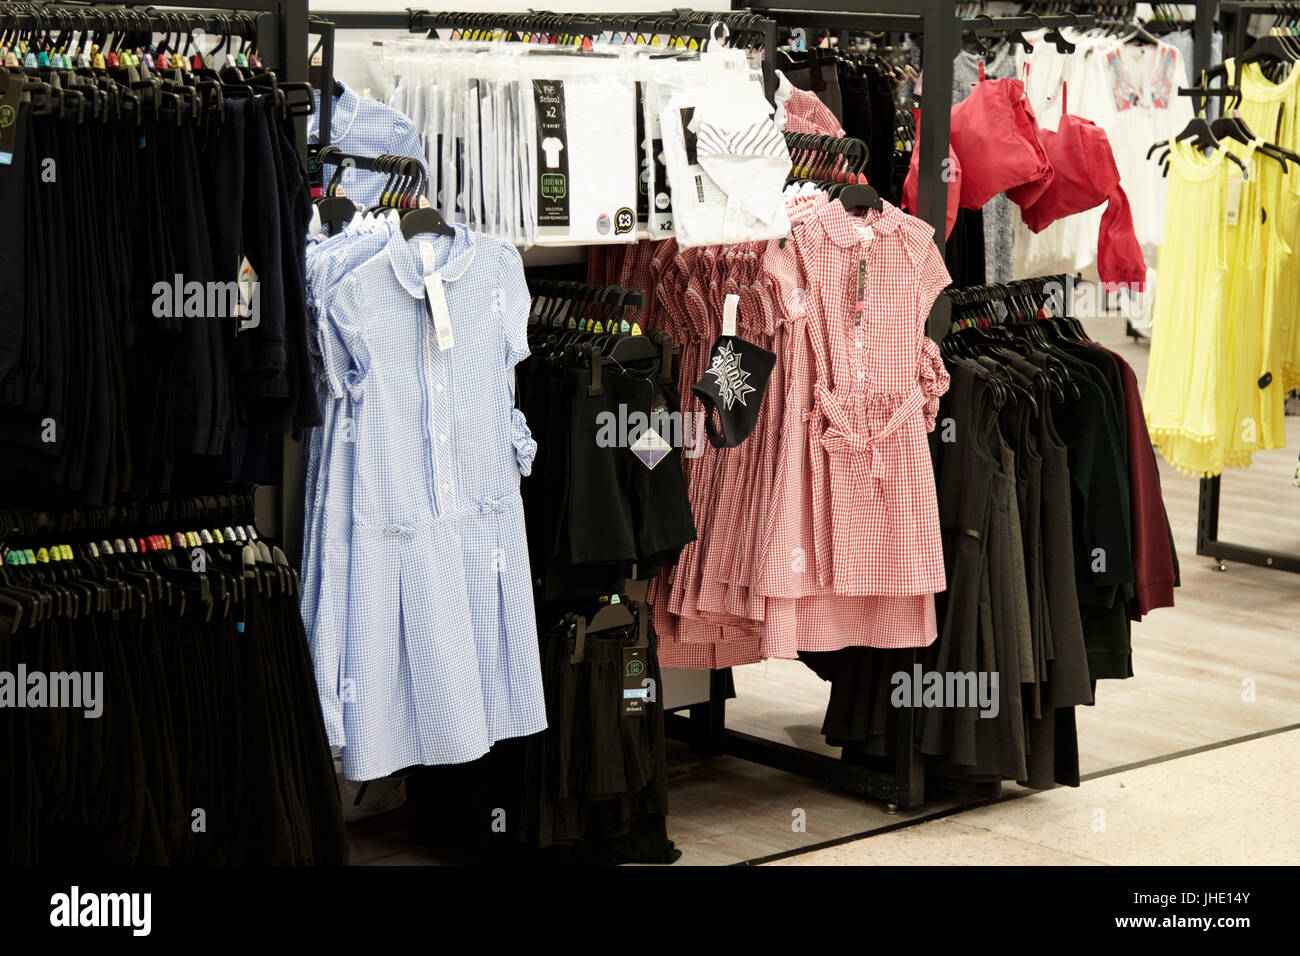 cheap school uniforms for sale in a uk tesco supermarket Stock Photo